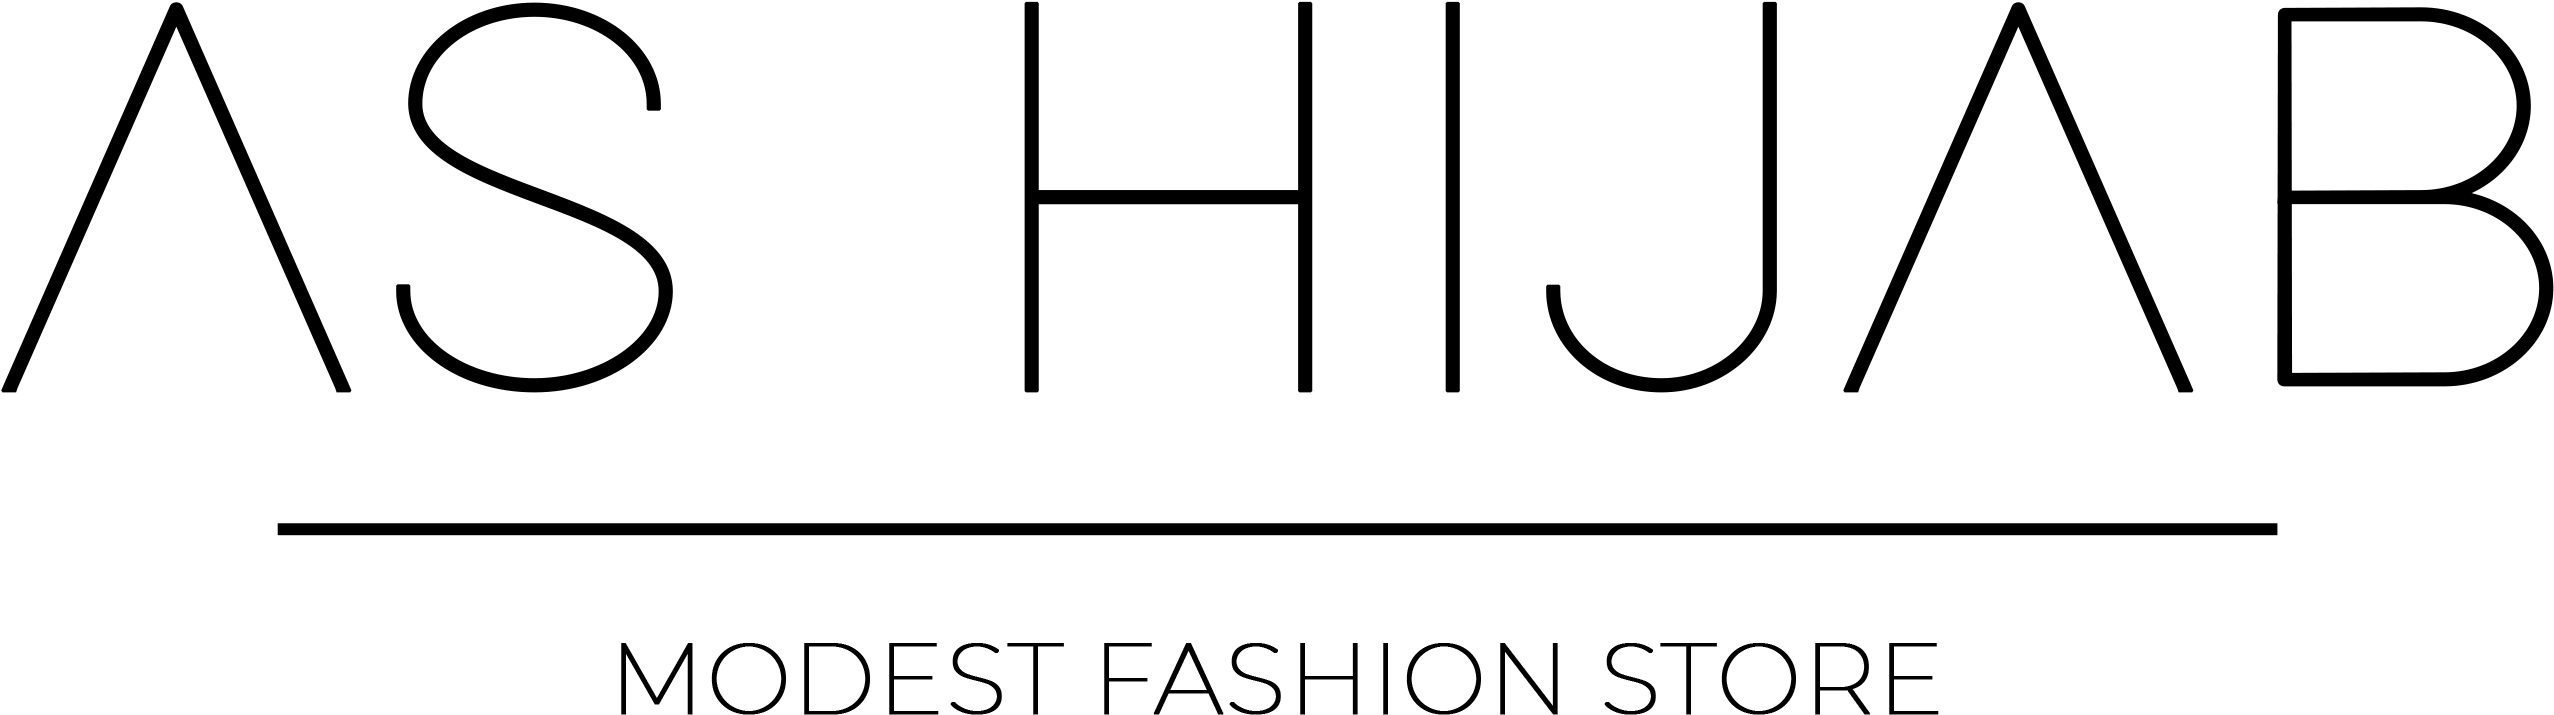 Logo As Hijab Noir Transparent 2560x V=1537478408 - Black-and-white (2560x777), Png Download